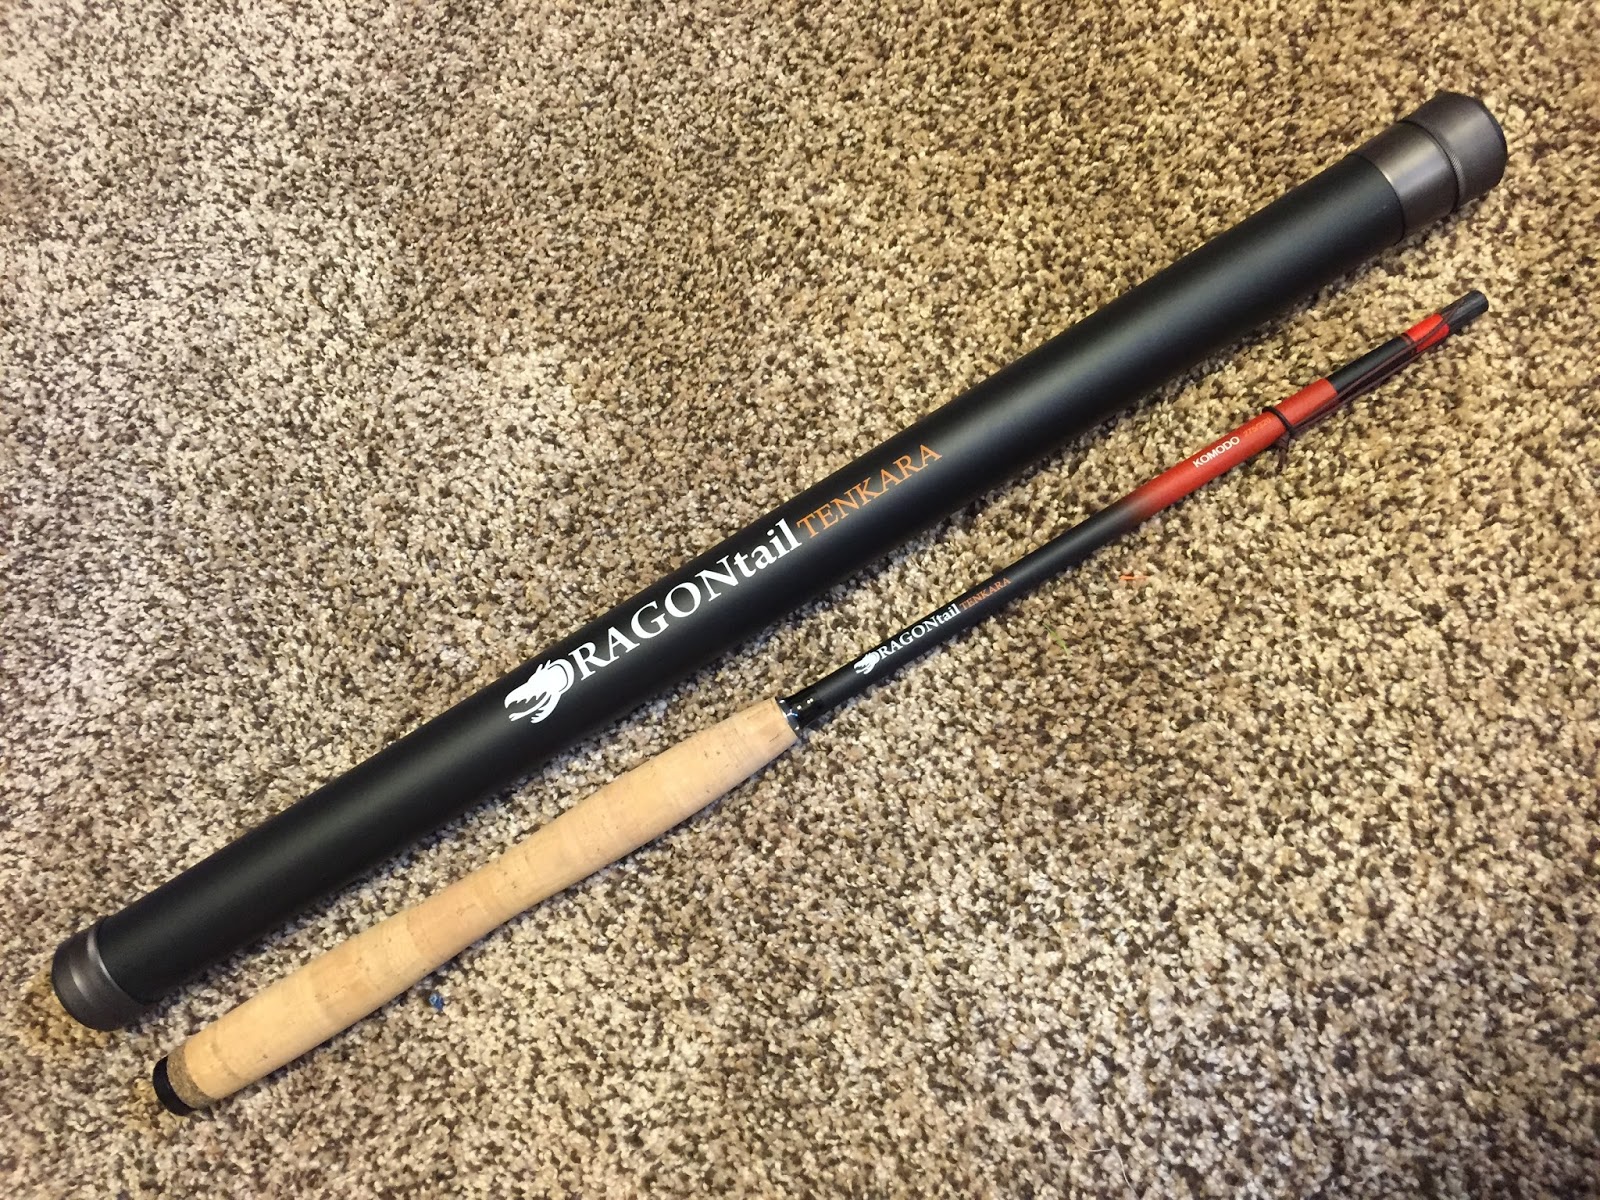 Teton Tenkara: When Rod Size Matters -- 270 cm and shorter rods